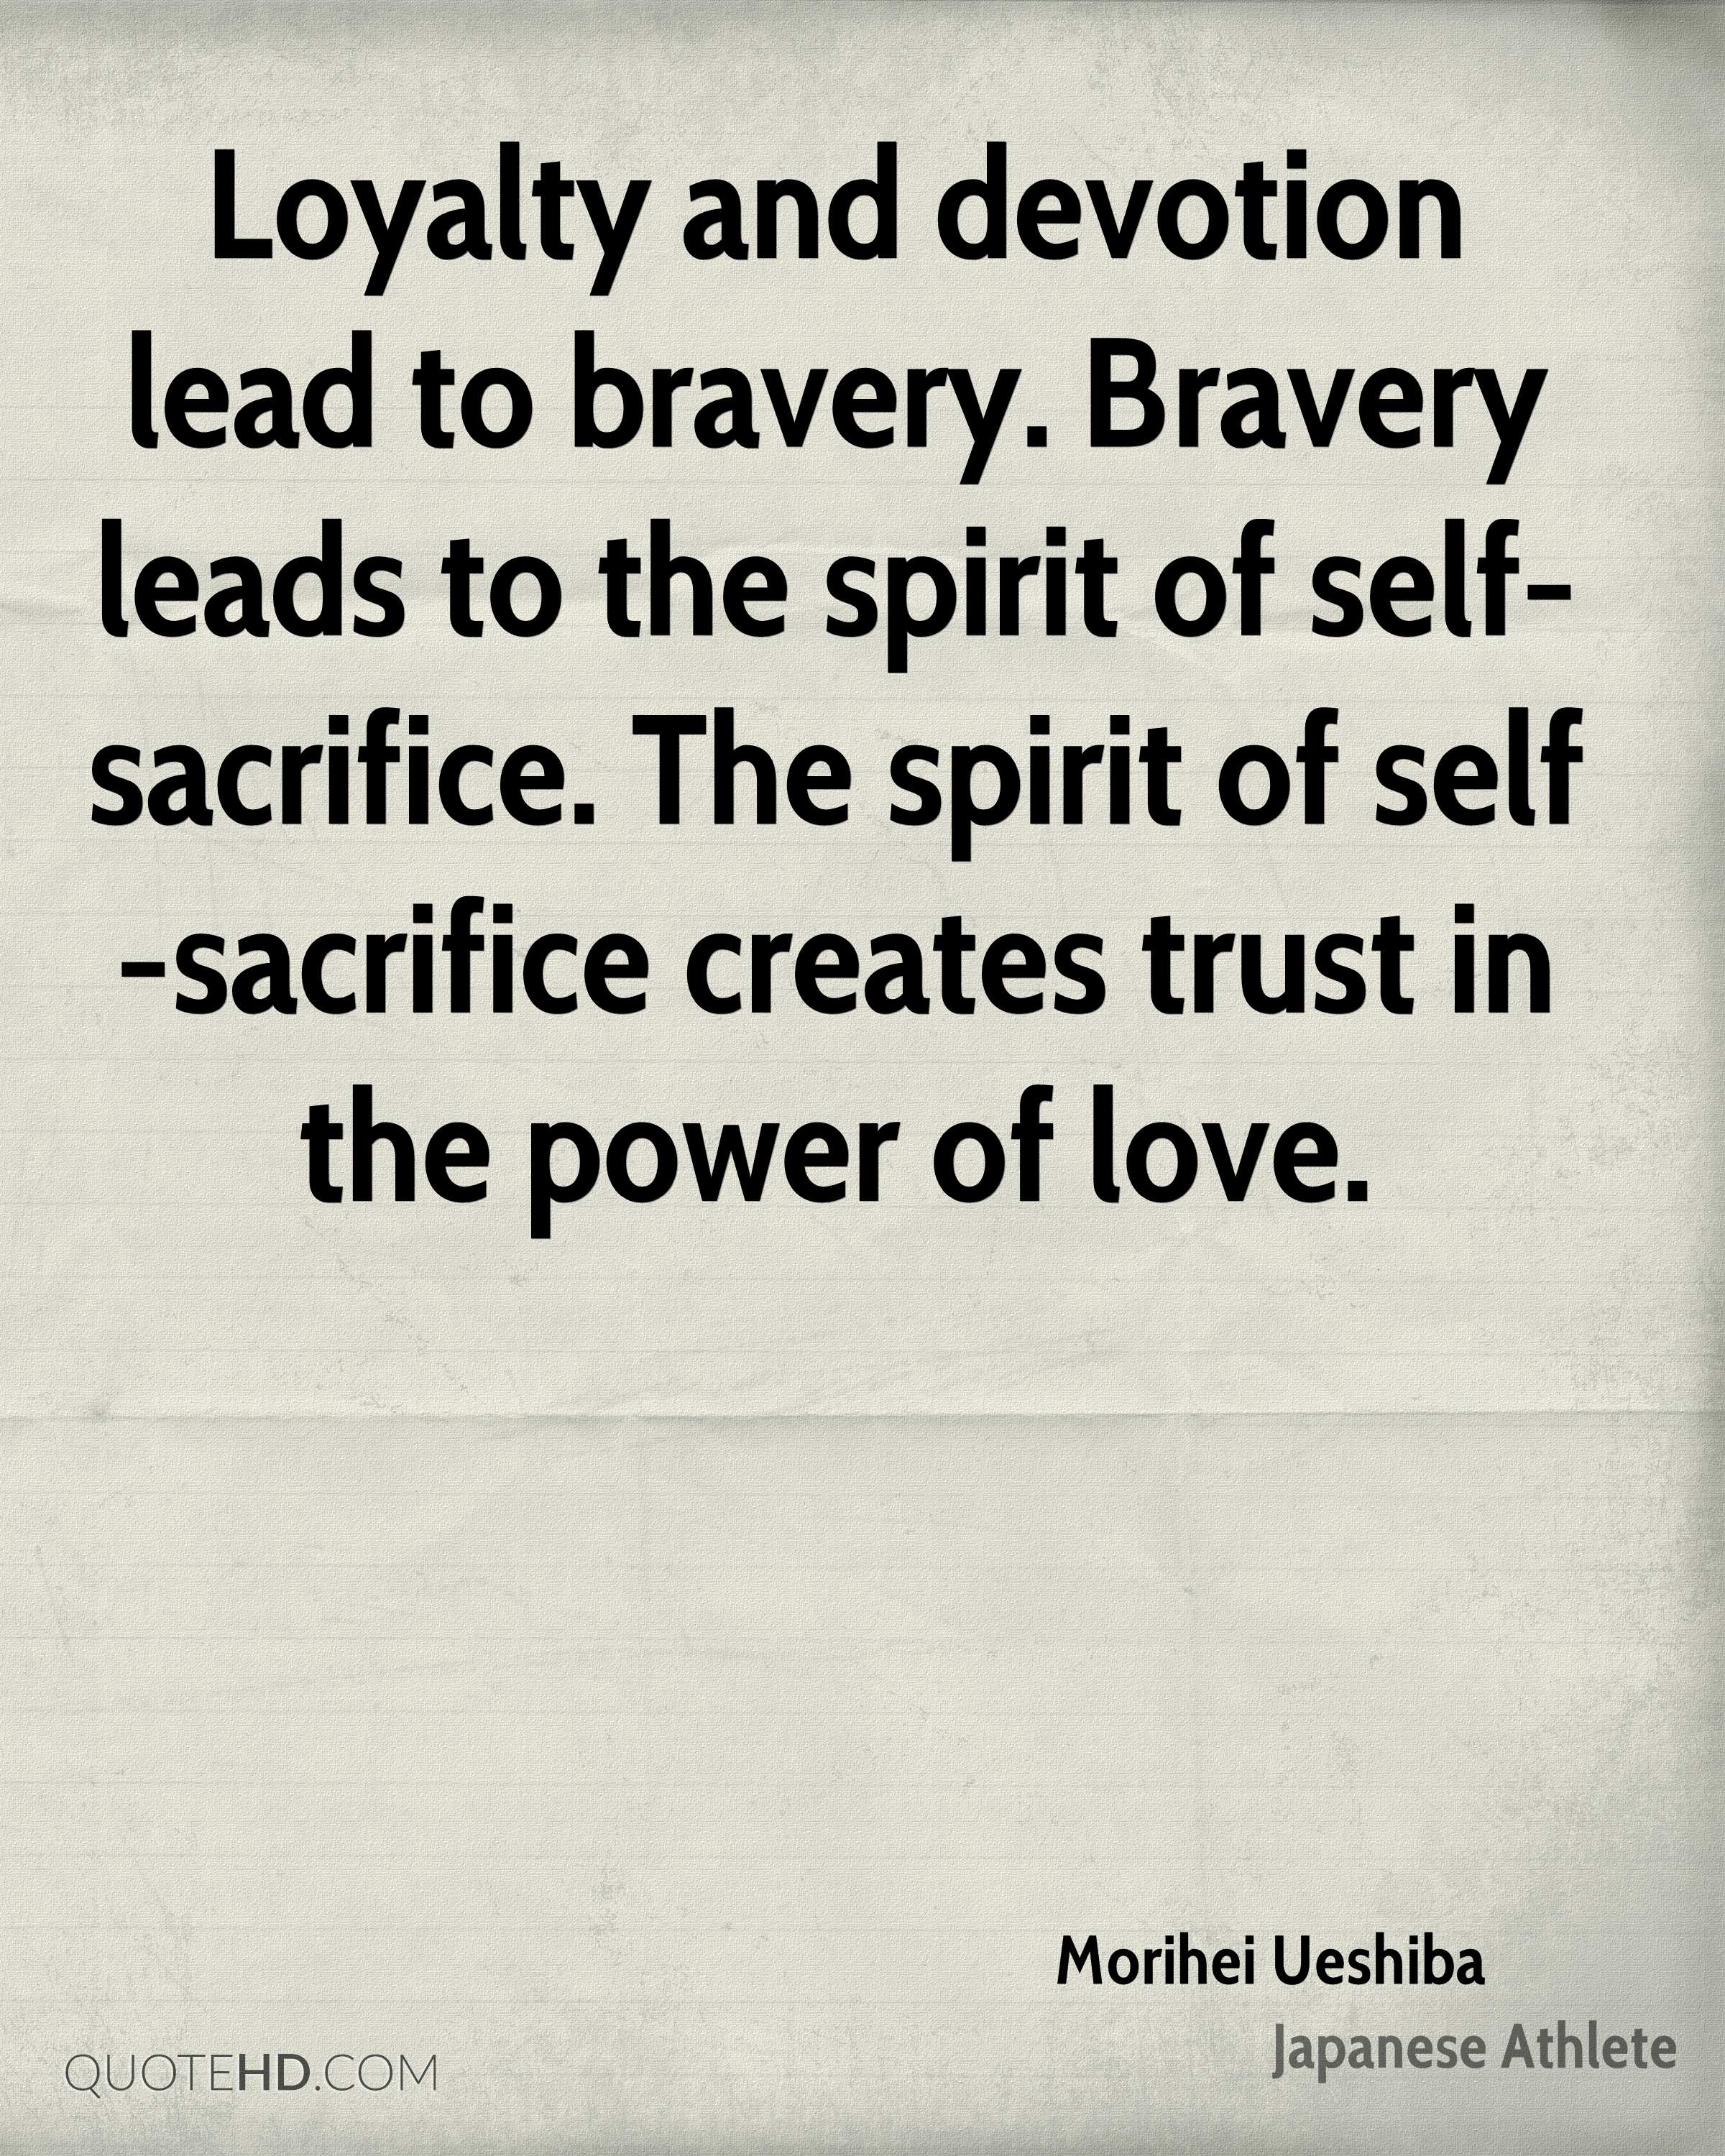 Loyalty and devotion lead to bravery. Bravery leads to the spirit of self-sacrifice. The spirit of self-sacrifice creates trust in the power of love. Morihei Ueshiba